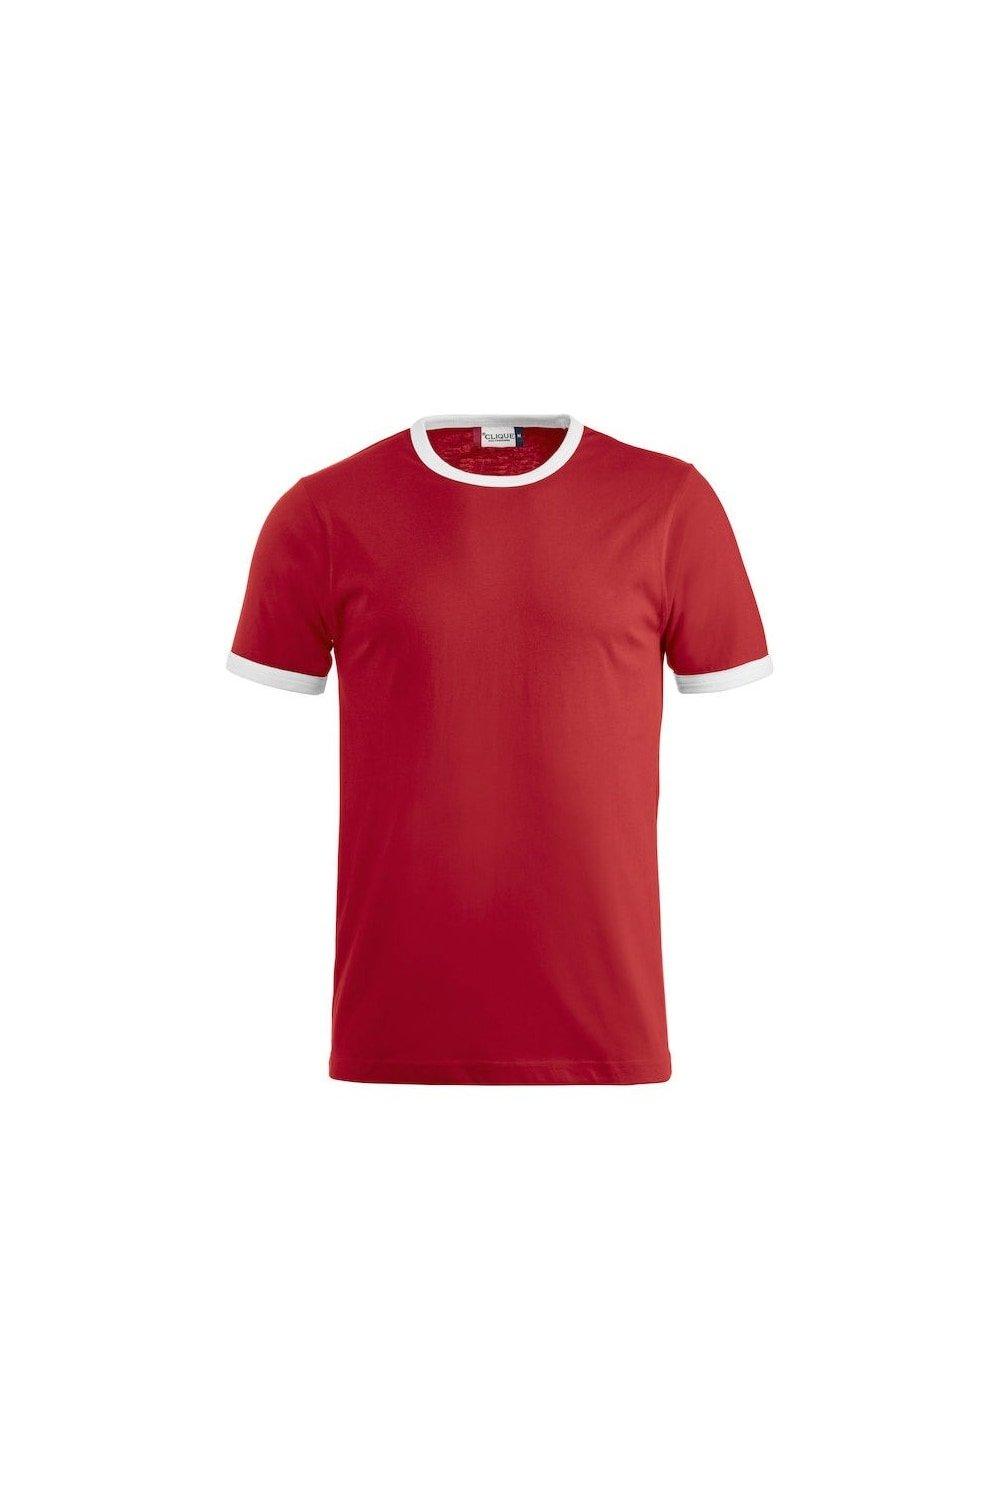 Имя Футболка Clique, красный футболка clique с надписью 42 размер